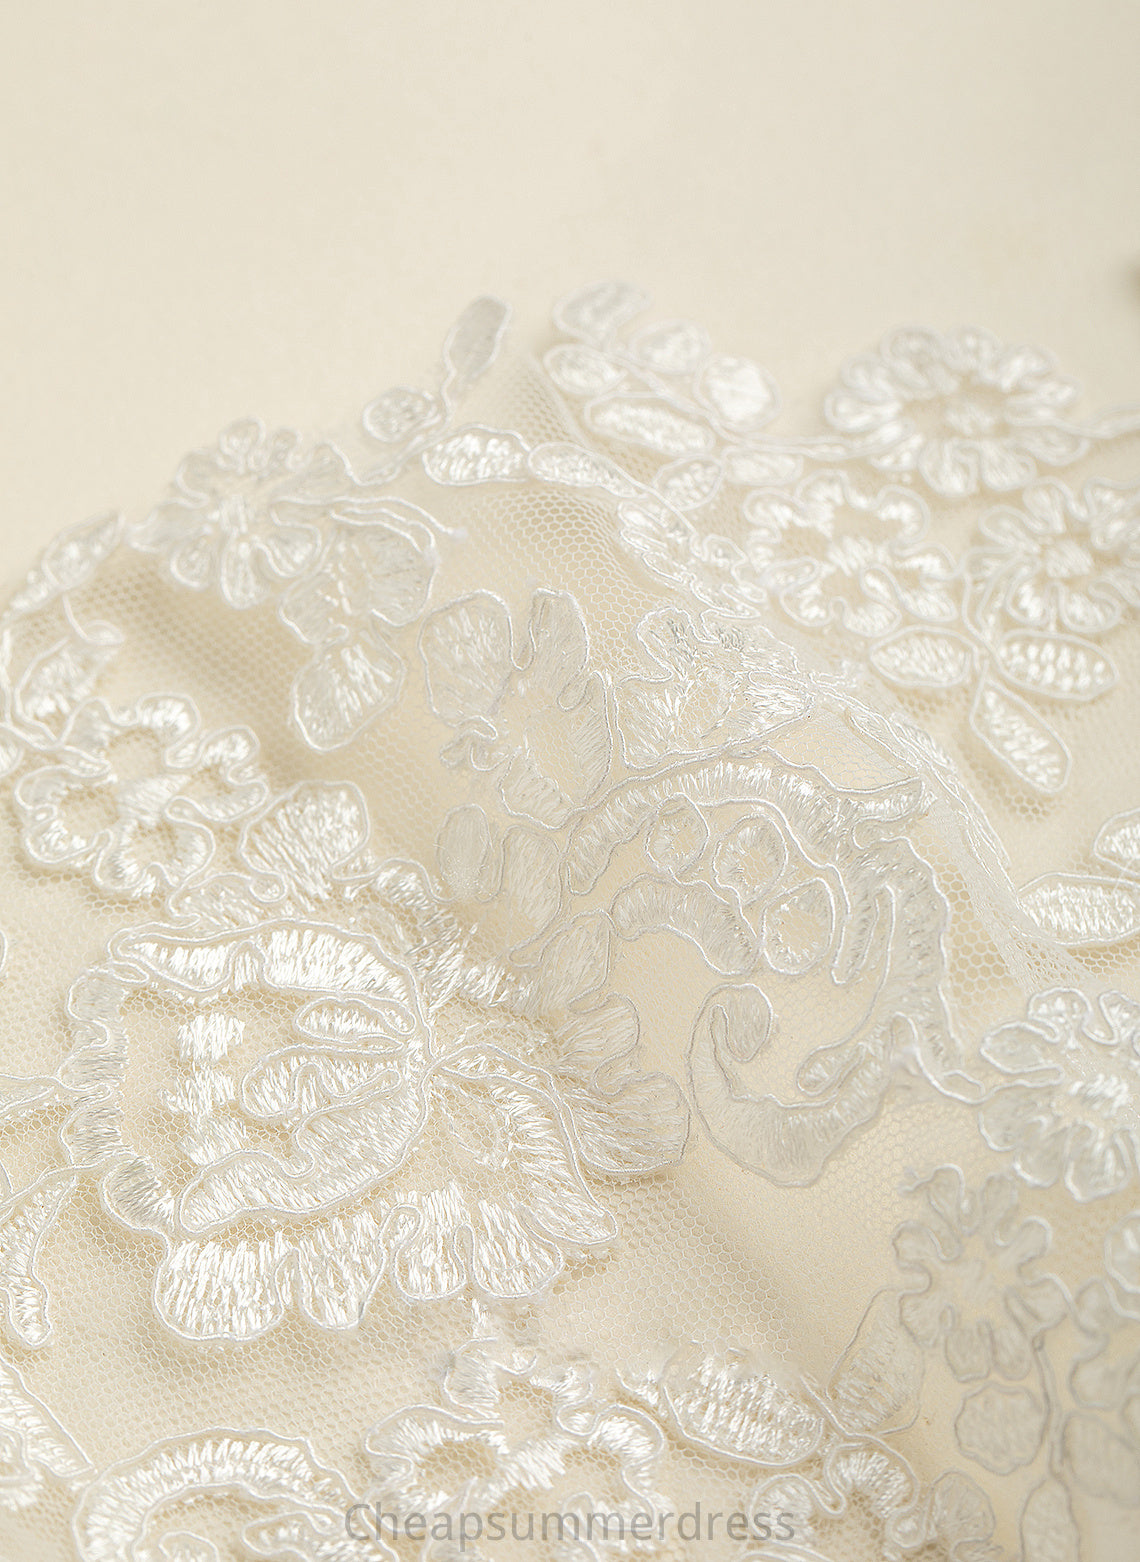 With Beading A-Line Wedding Dresses Wedding V-neck Sweep Dress Train Lace Precious Chiffon Sequins